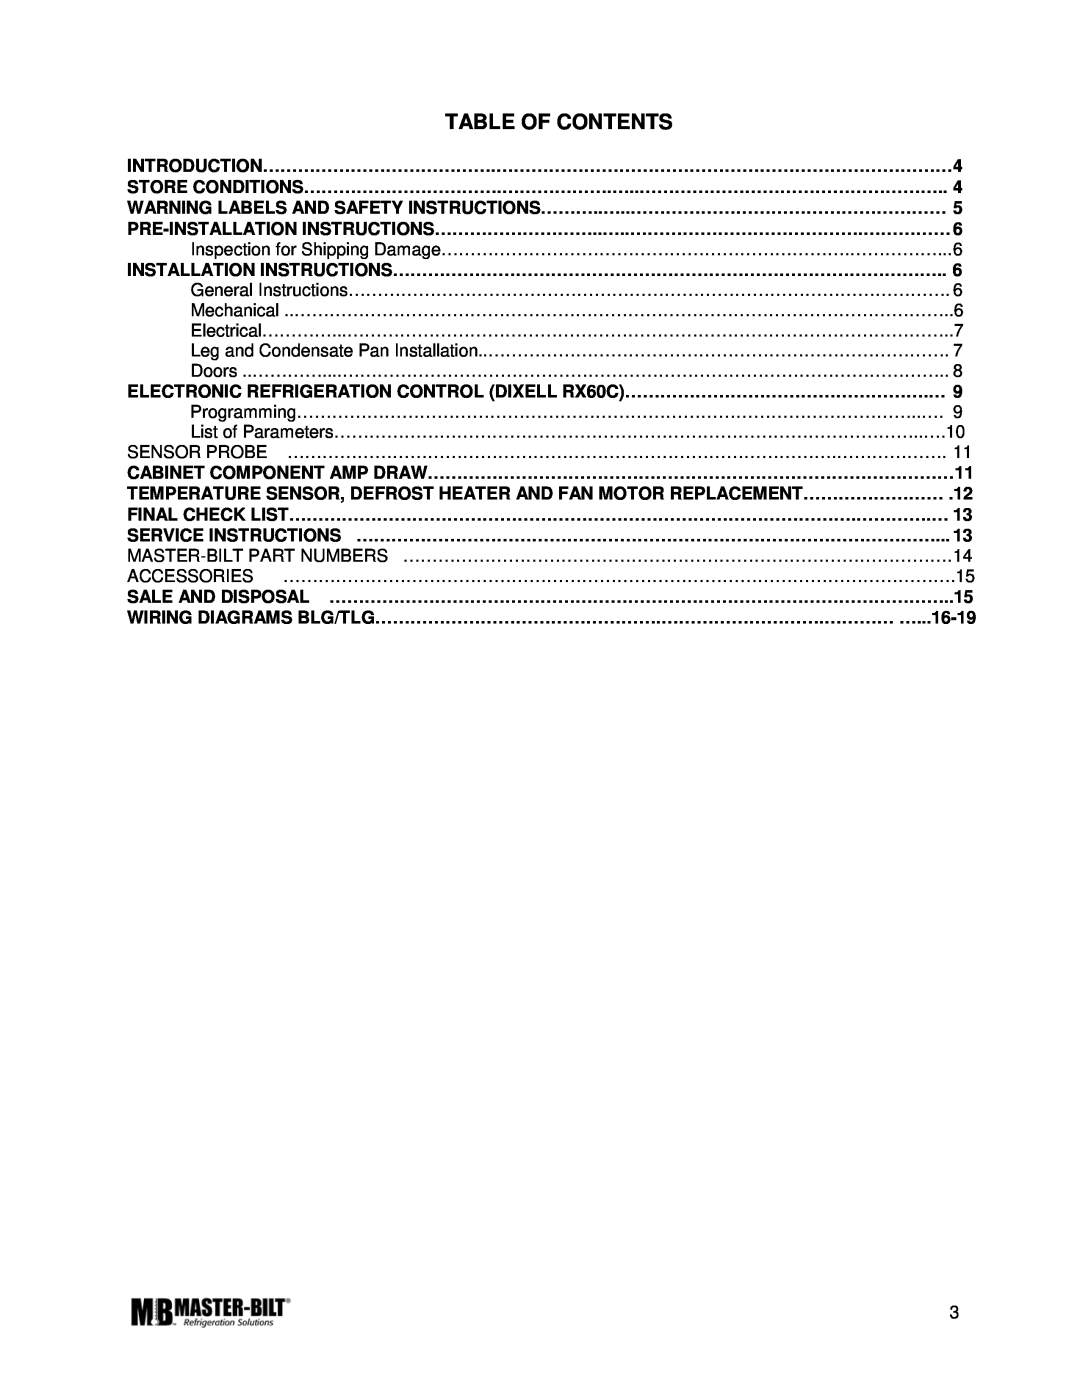 Master Bilt K manual Table Of Contents 